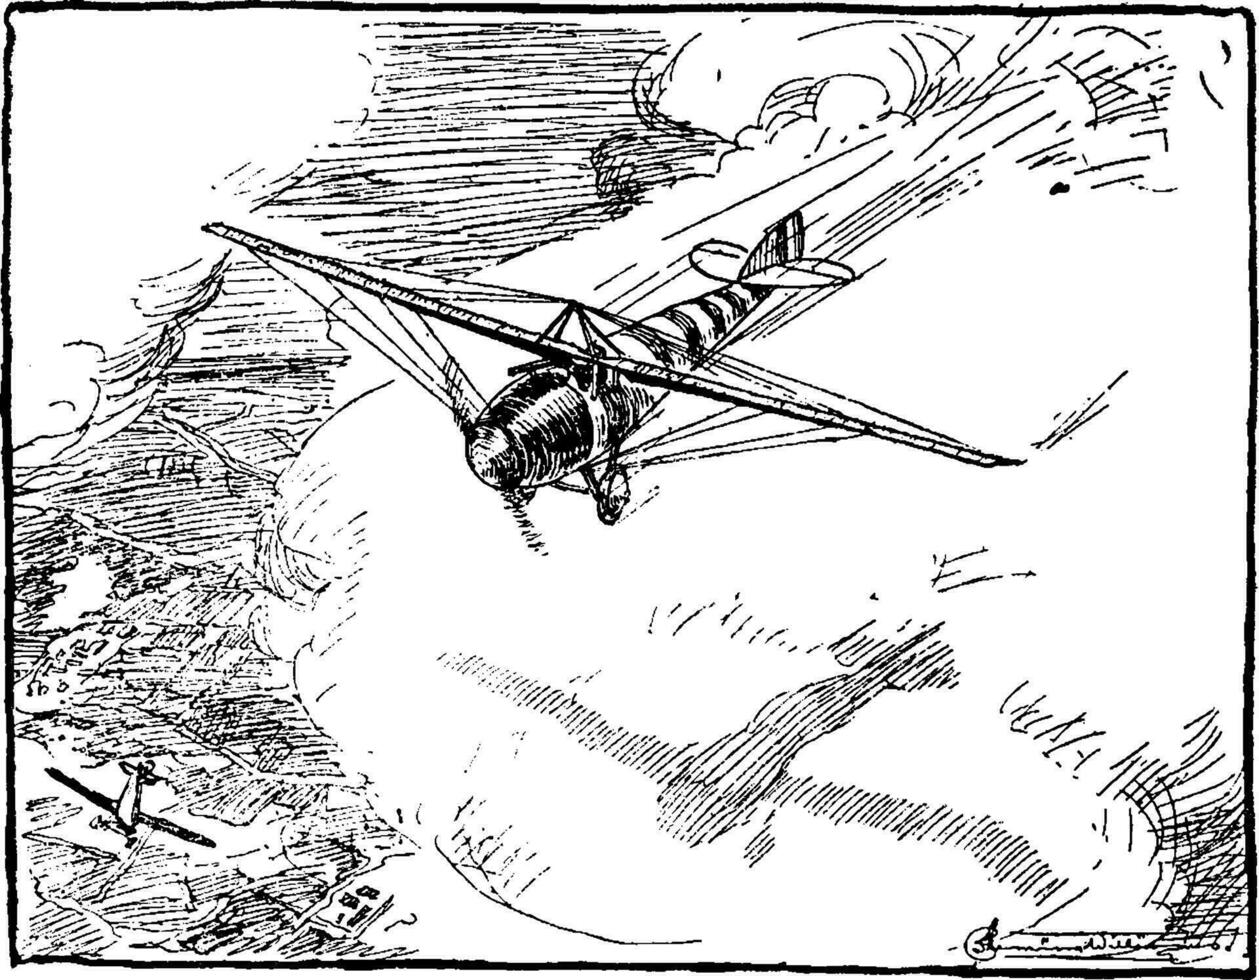 Airplane Flying Above Land, vintage illustration. vector